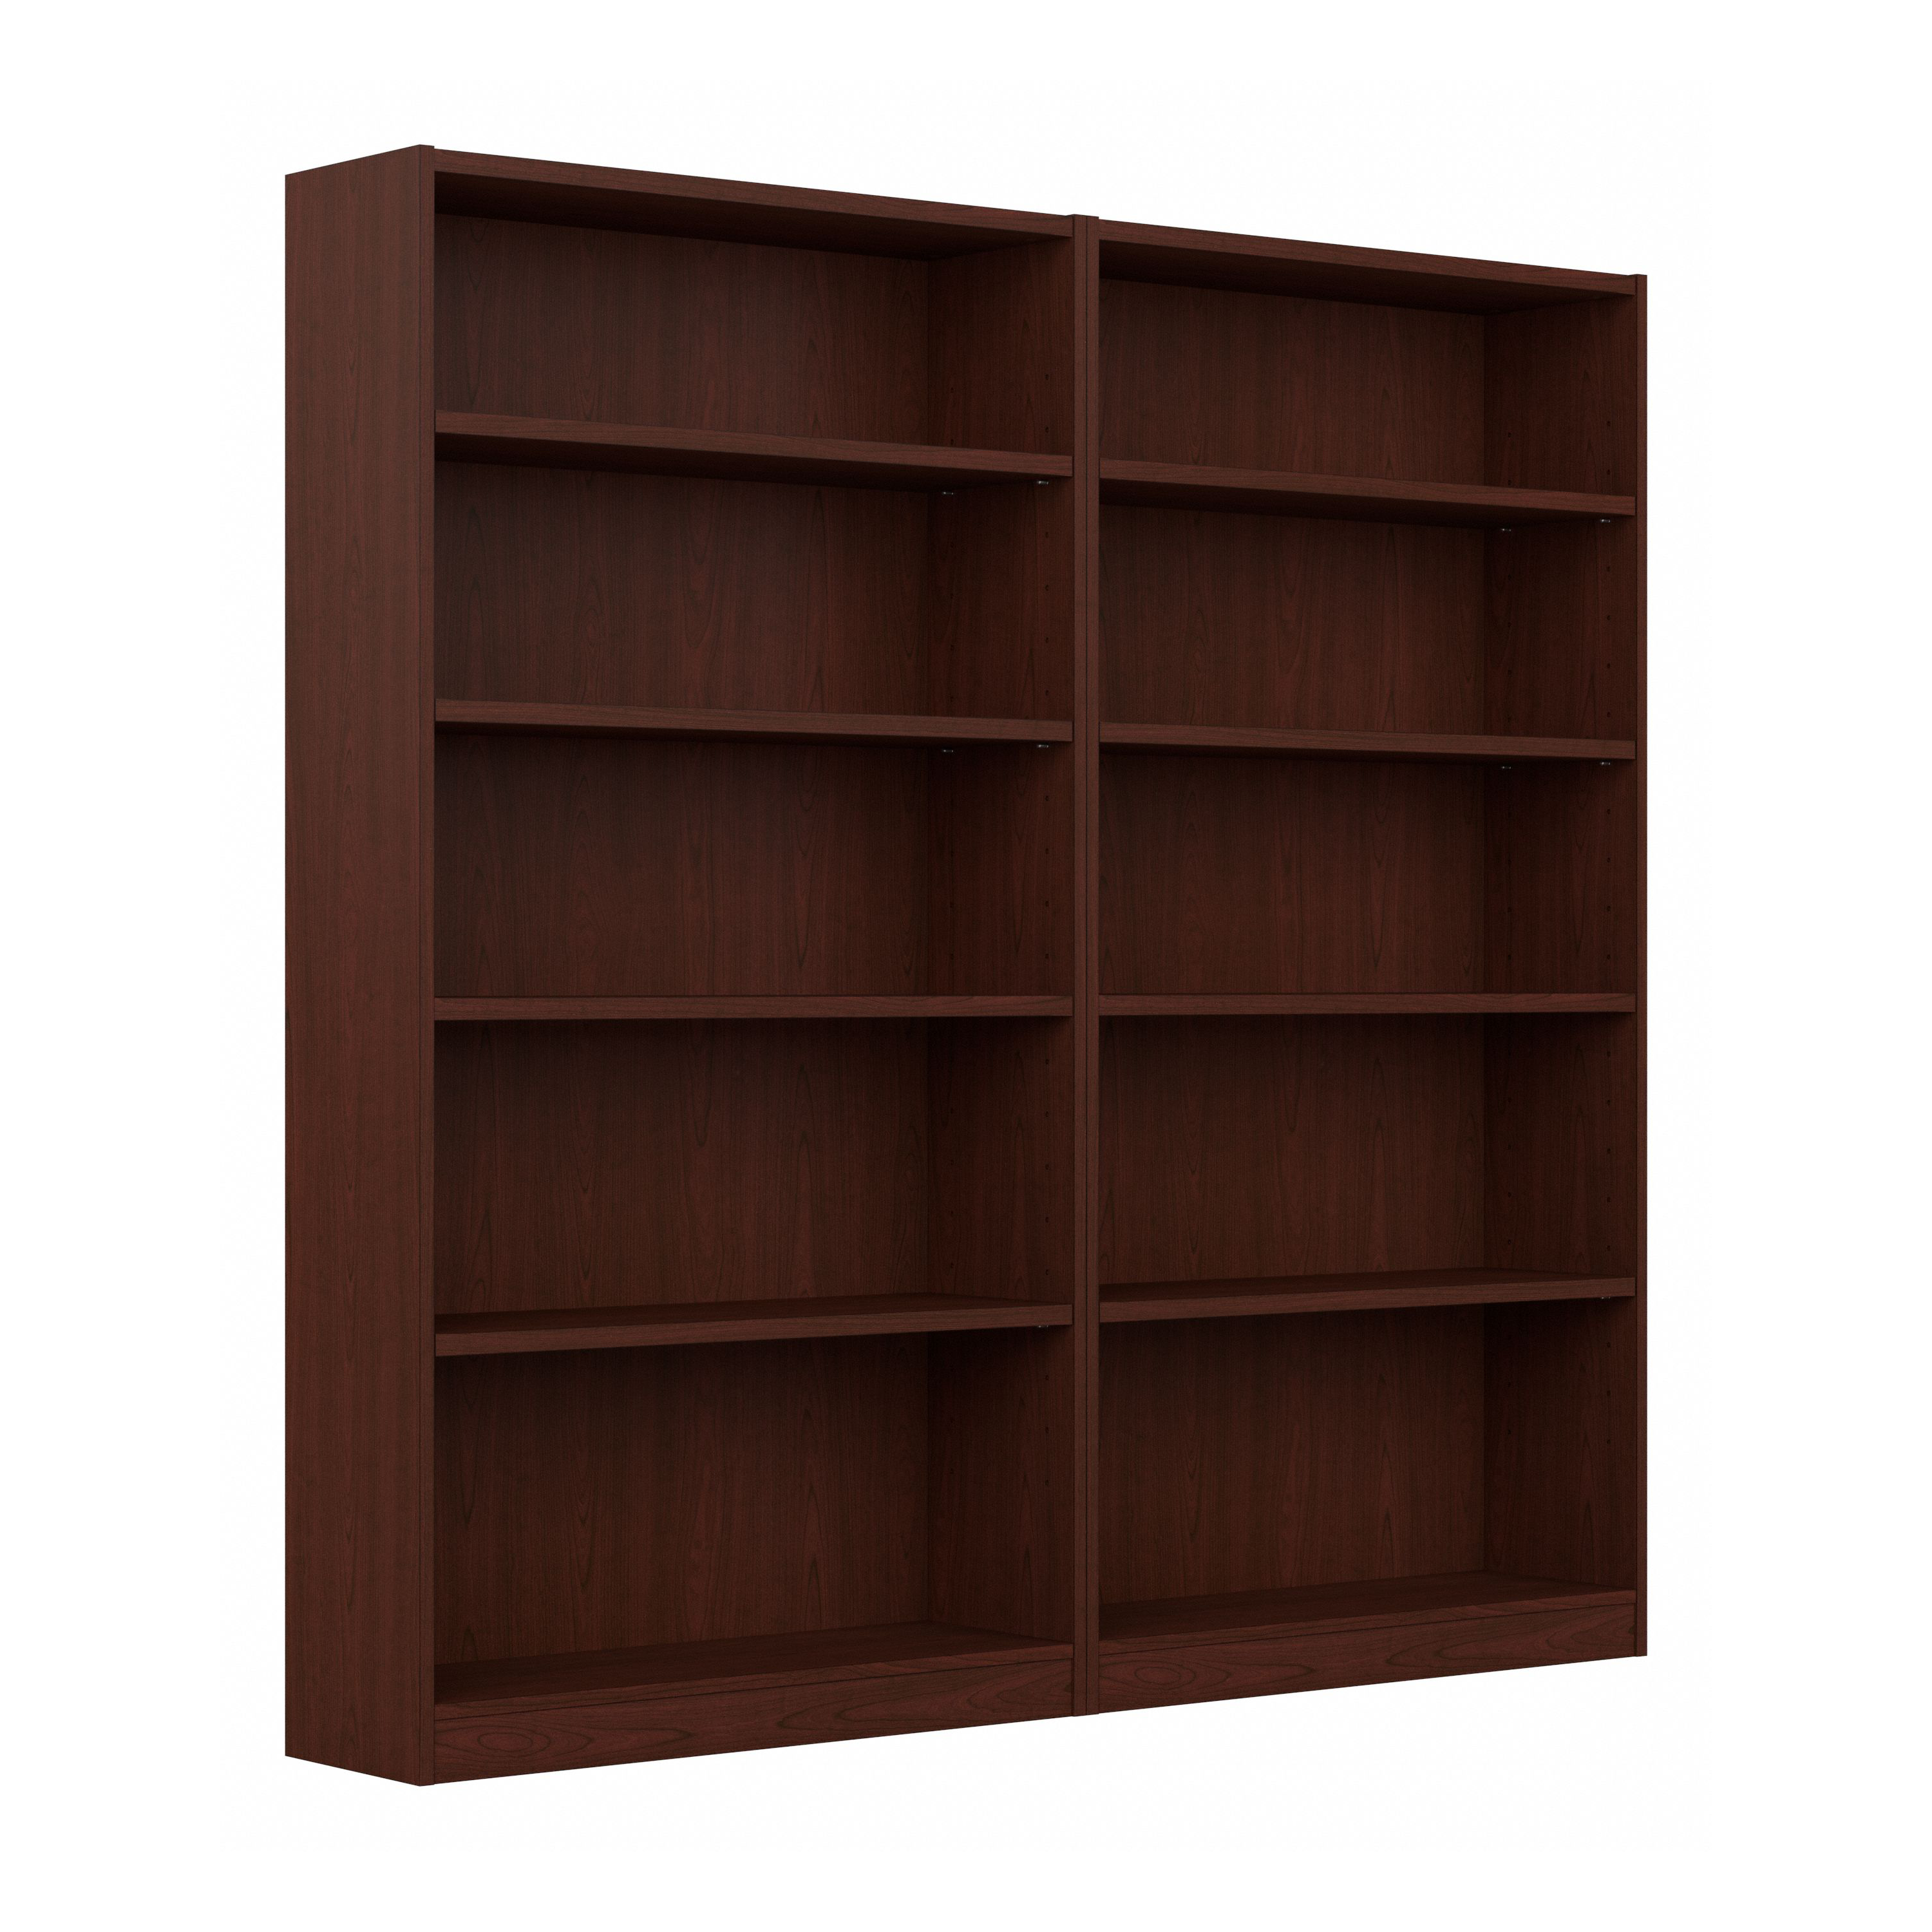 Shop Bush Furniture Universal Tall 5 Shelf Bookcase - Set of 2 02 UB003VC #color_vogue cherry